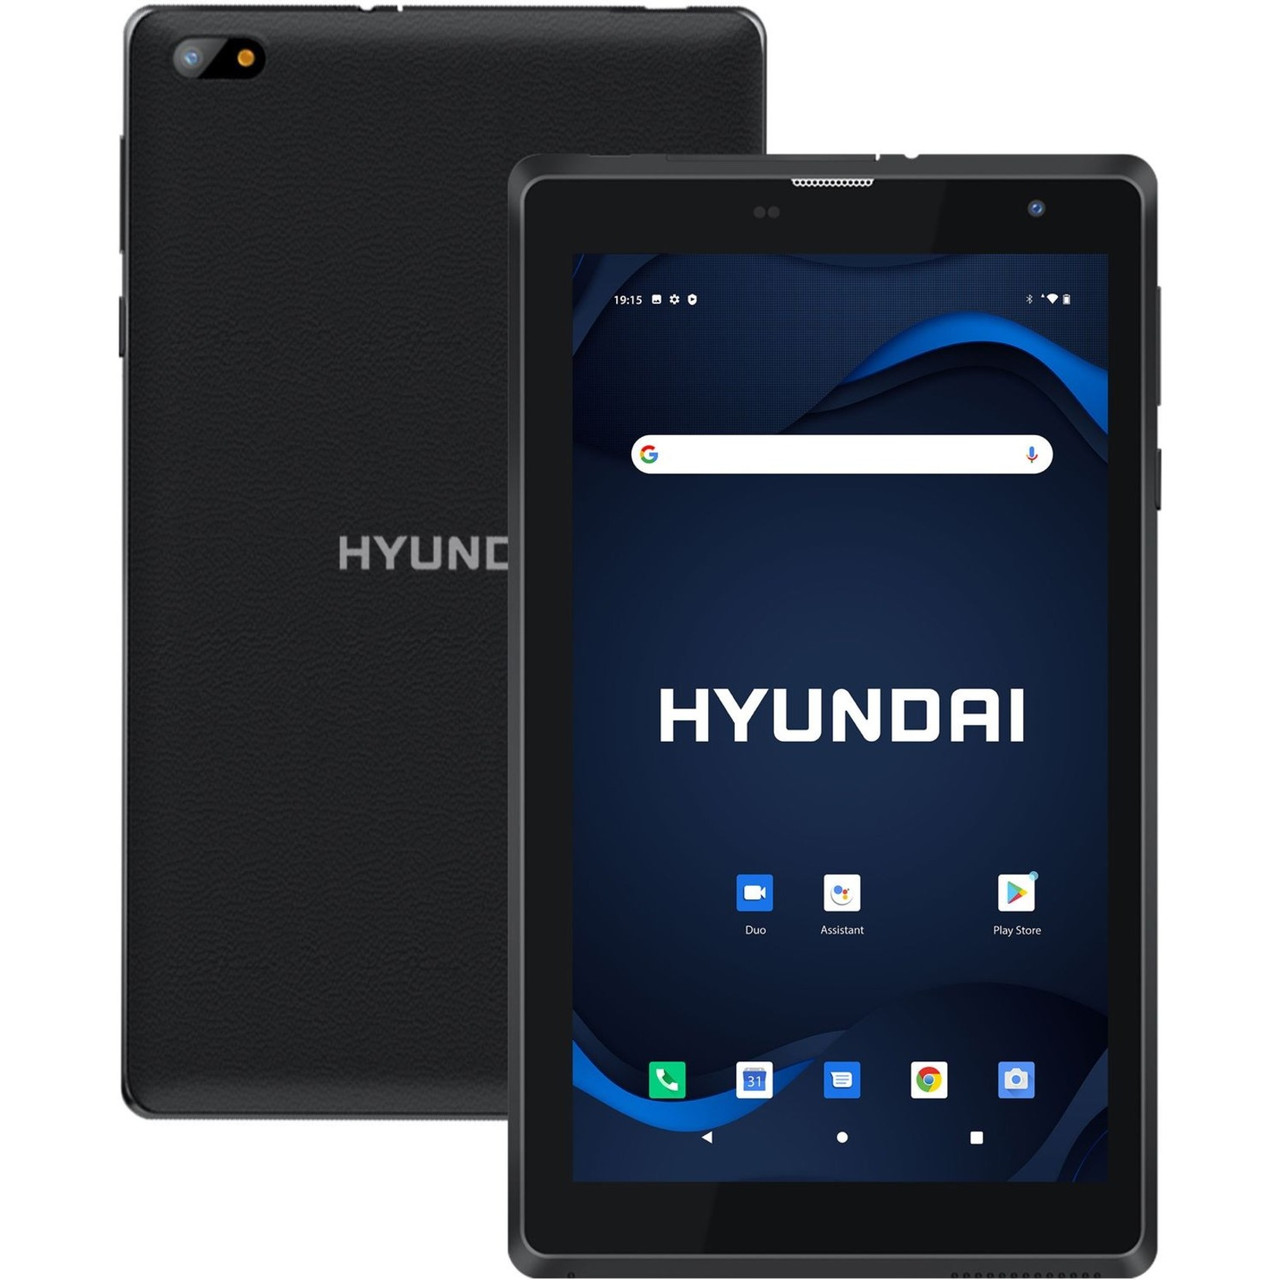 Hyundai HyTab Plus 7WB1, 7" Tablet, 1024x600 IPS, Android 10 Go edition, Quad-Core Processor, 2GB RAM, 32GB Storage, 2MP/5MP, WIFI - Black - HT7WB1RBK